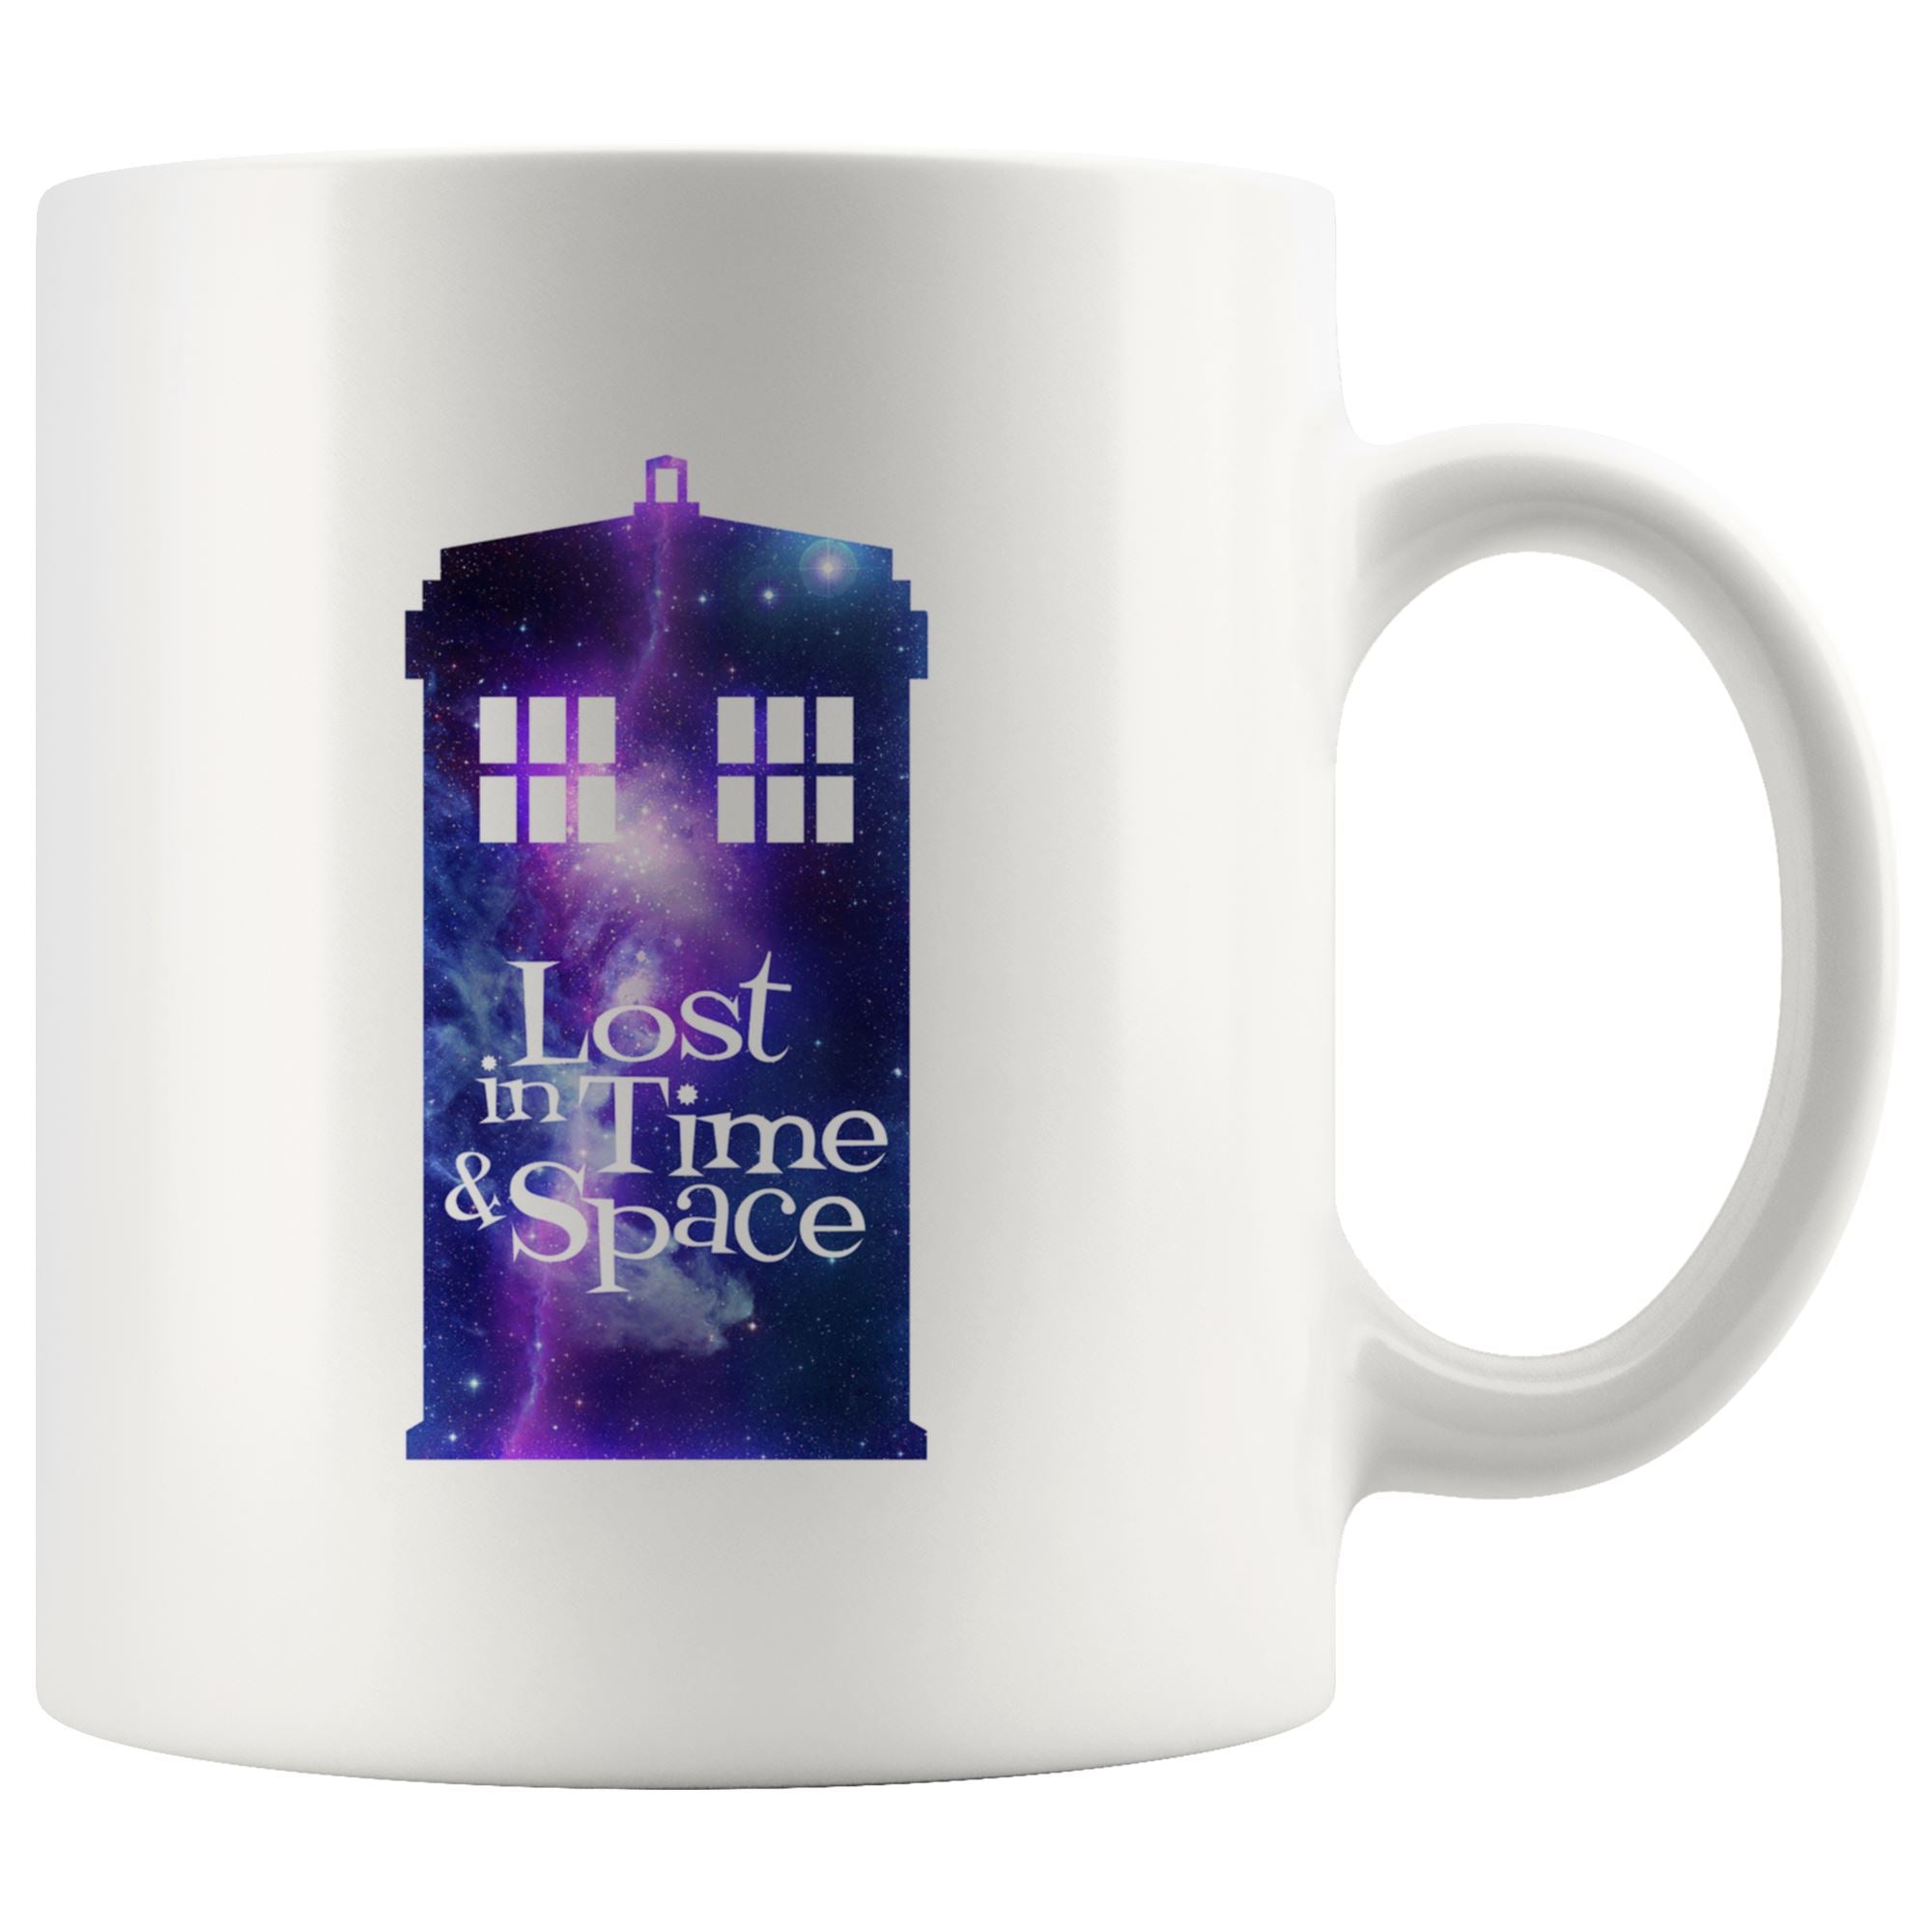 Lost In Time & Space Drinkware teelaunch 11oz Mug 